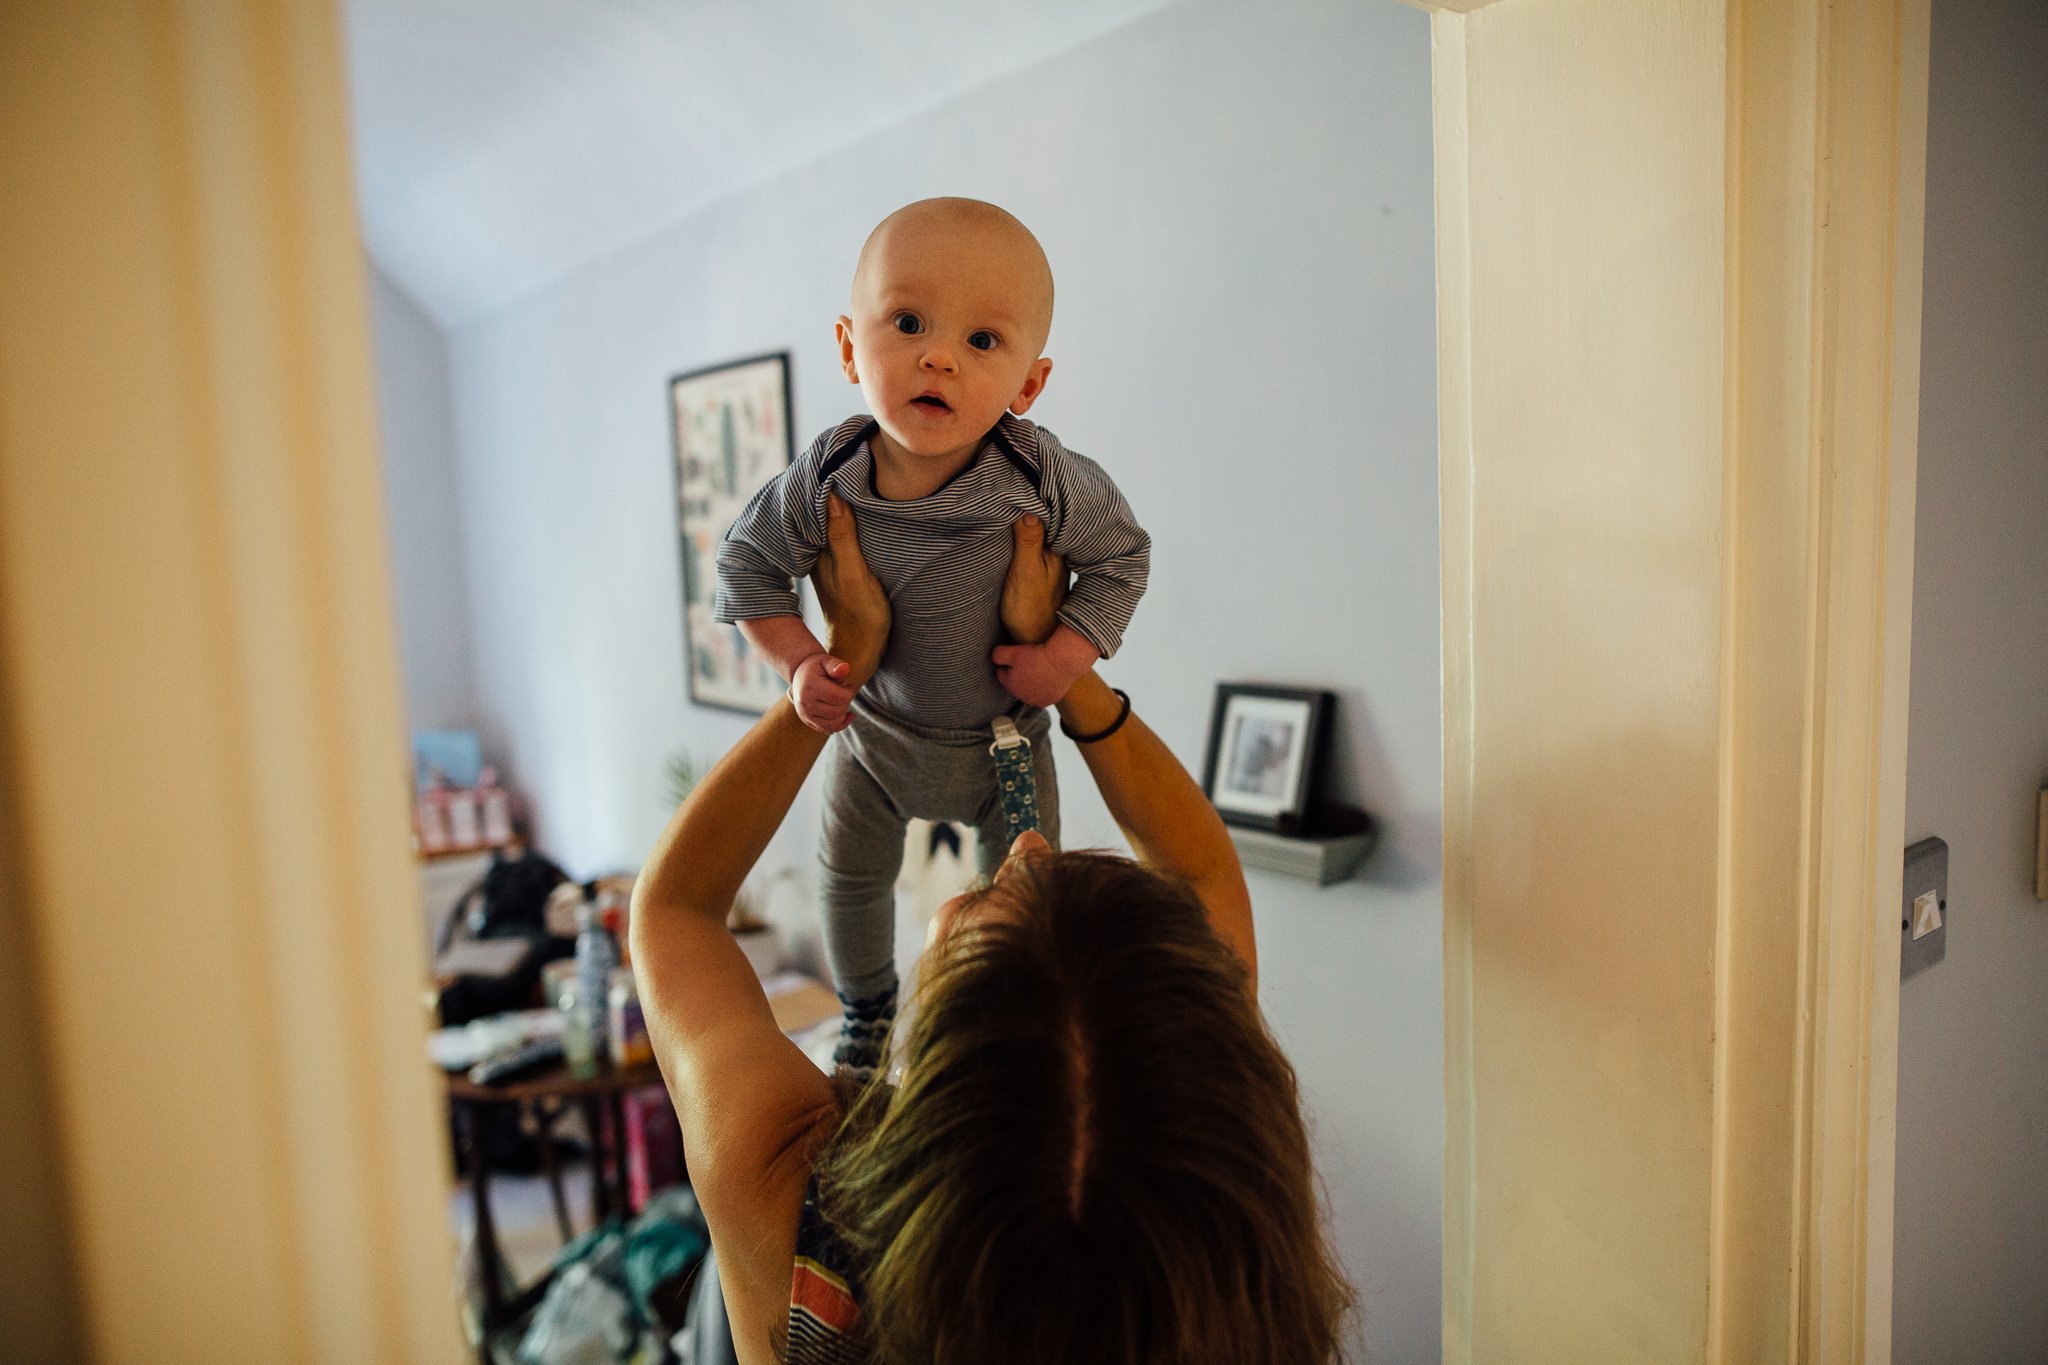  Baby being held aloft 